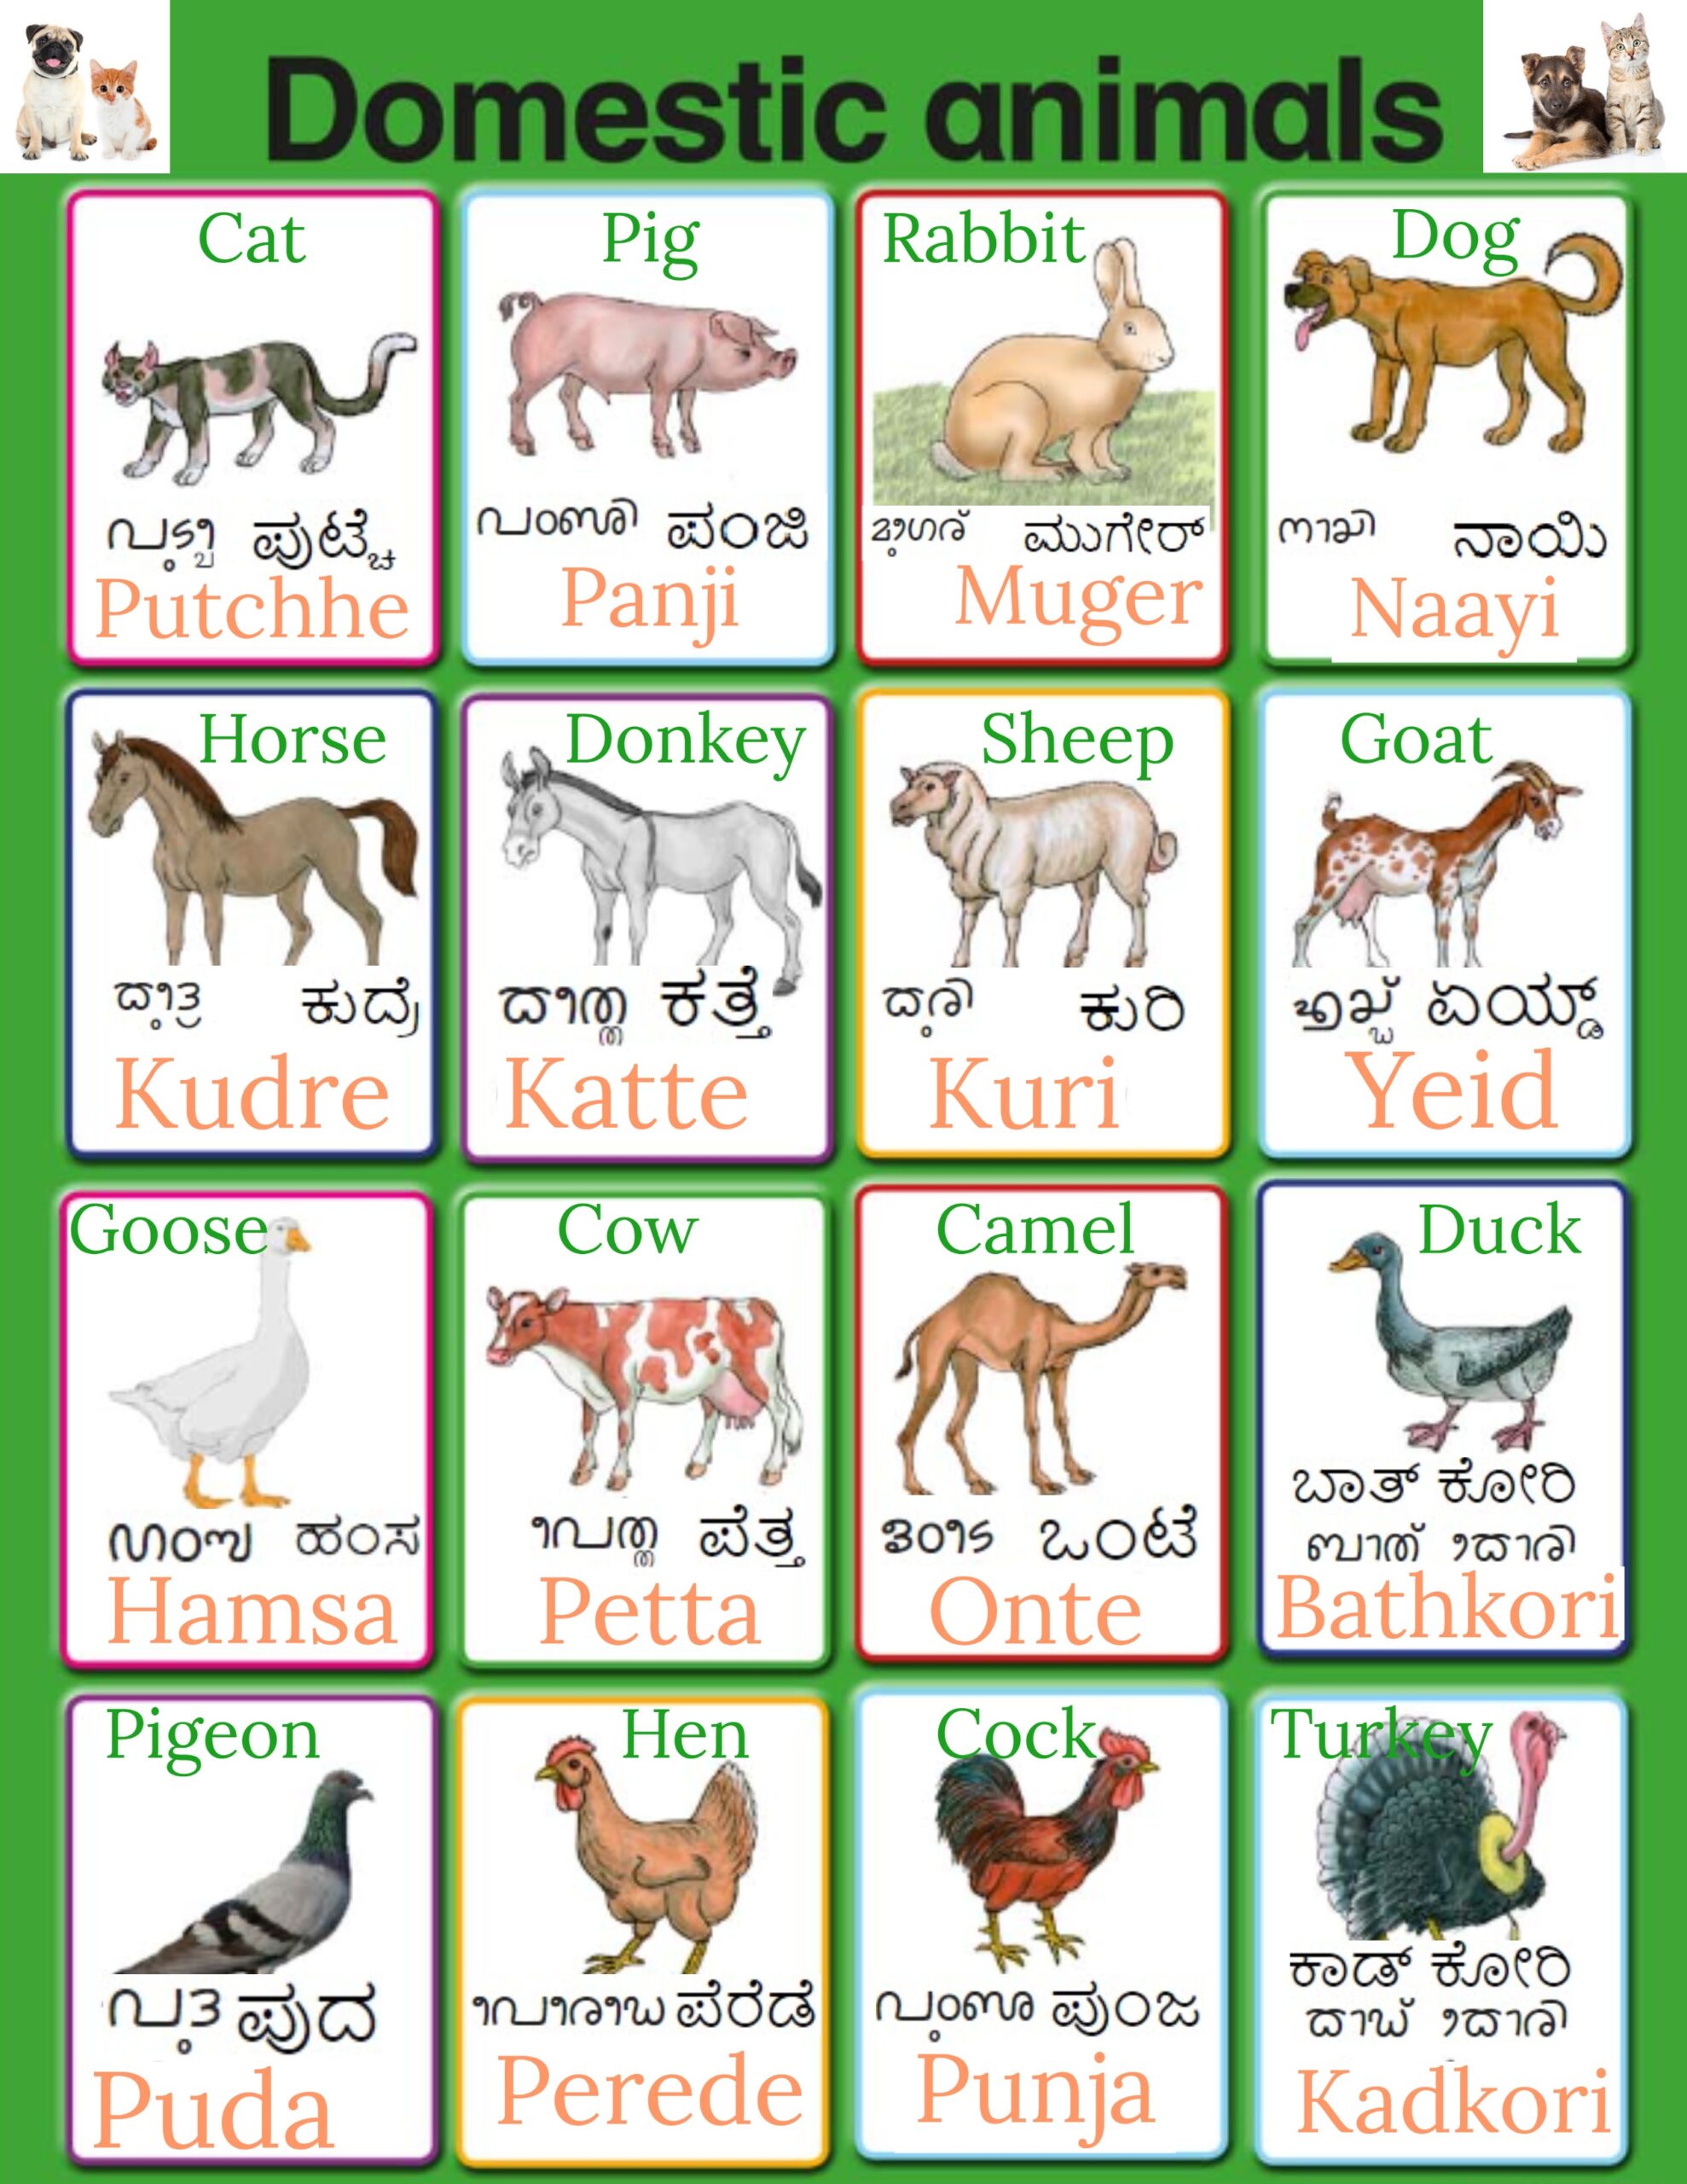 Domestic Animals in Tulu Language